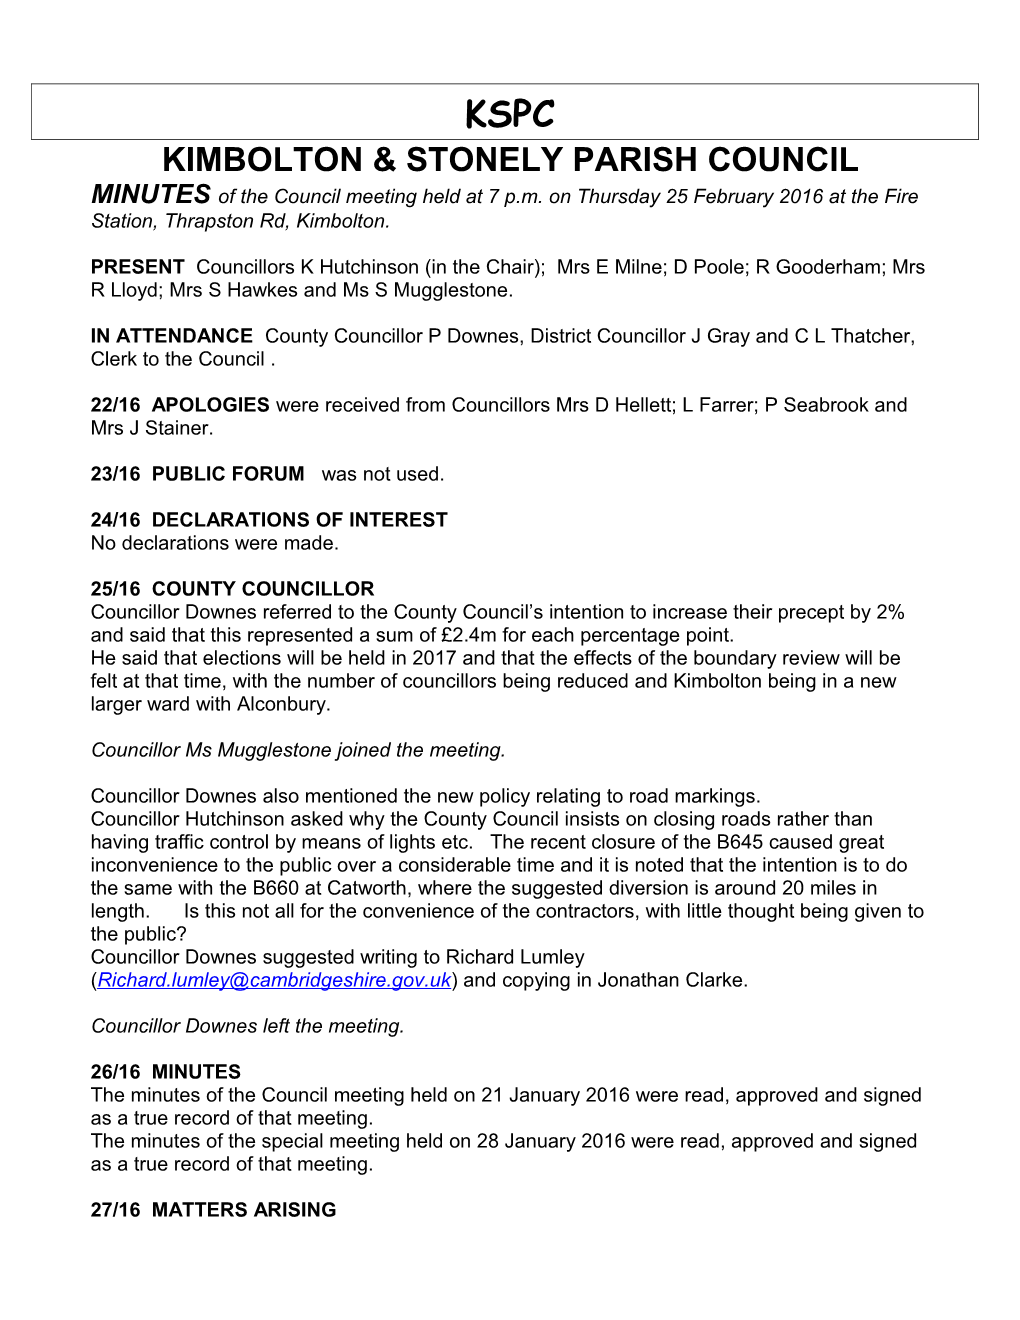 Kimbolton & Stonely Parish Council s3